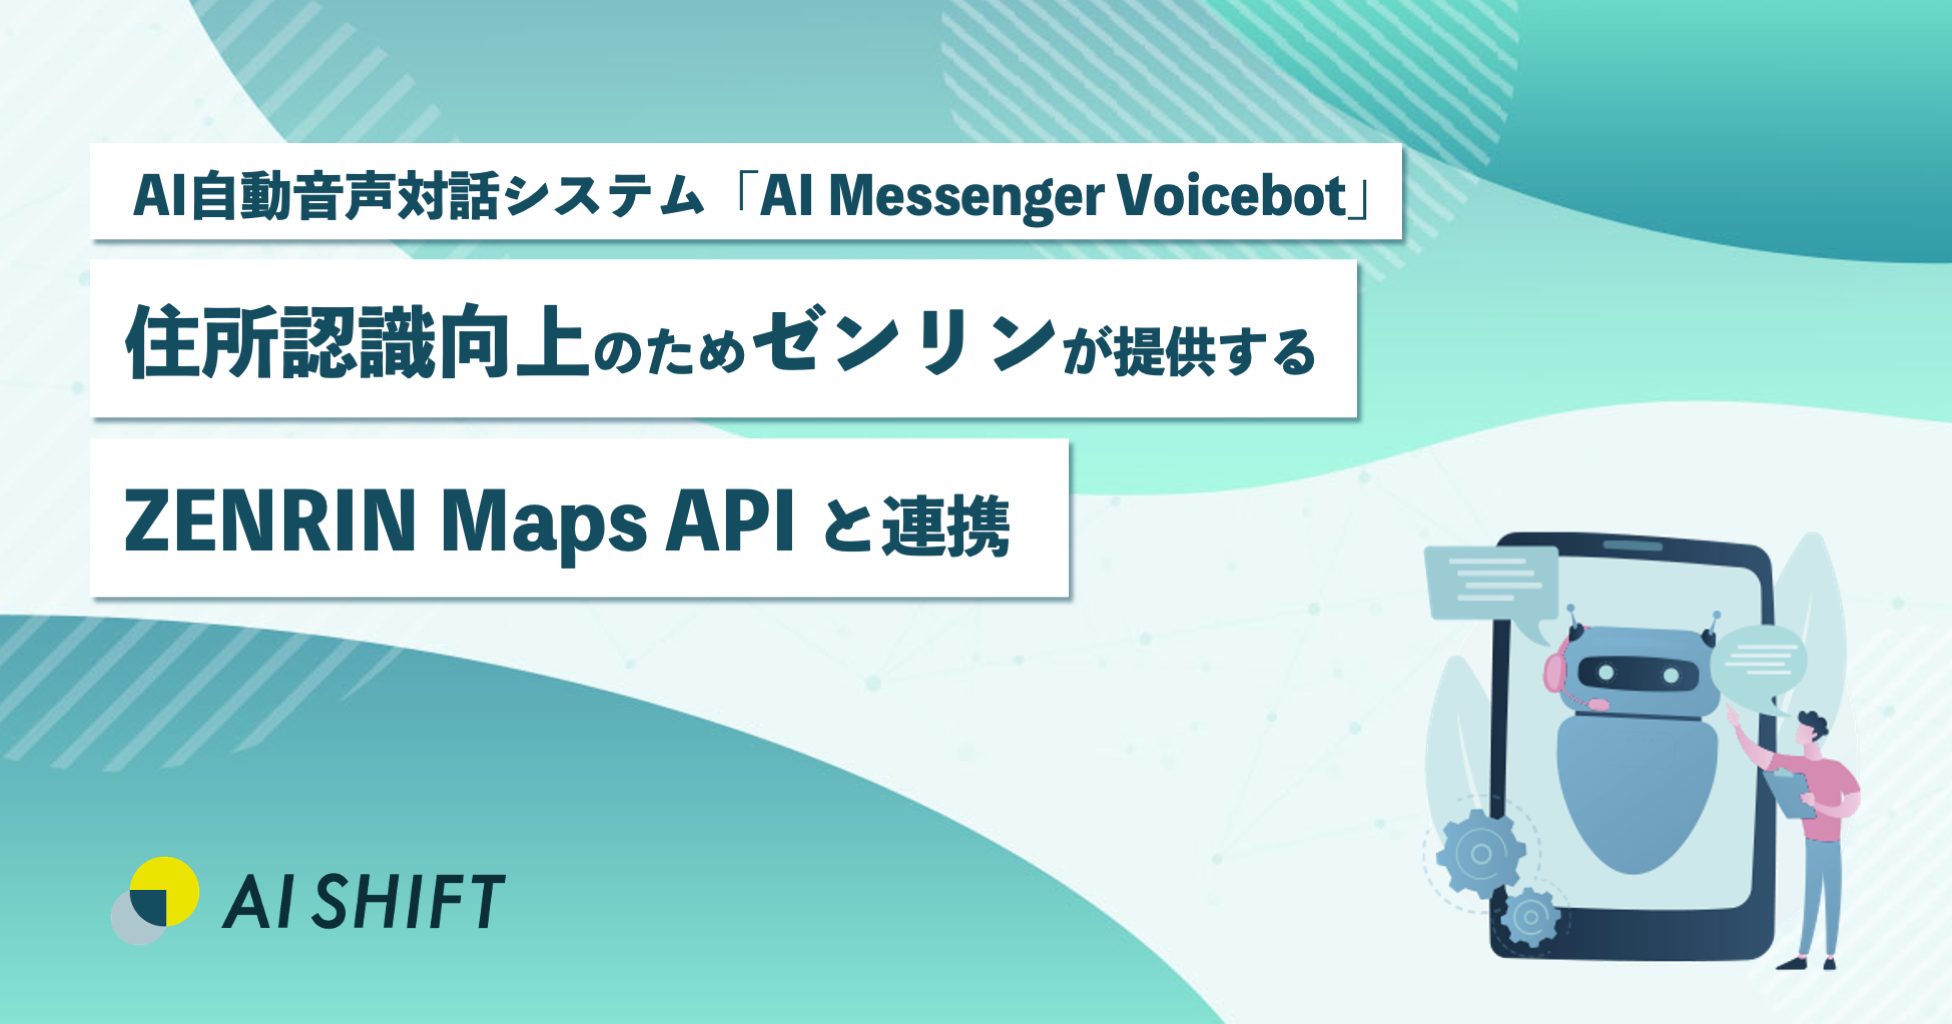 AI Messenger Voicebot、住所認識向上のためゼンリンが提供する「ZENRIN Maps API」と連携